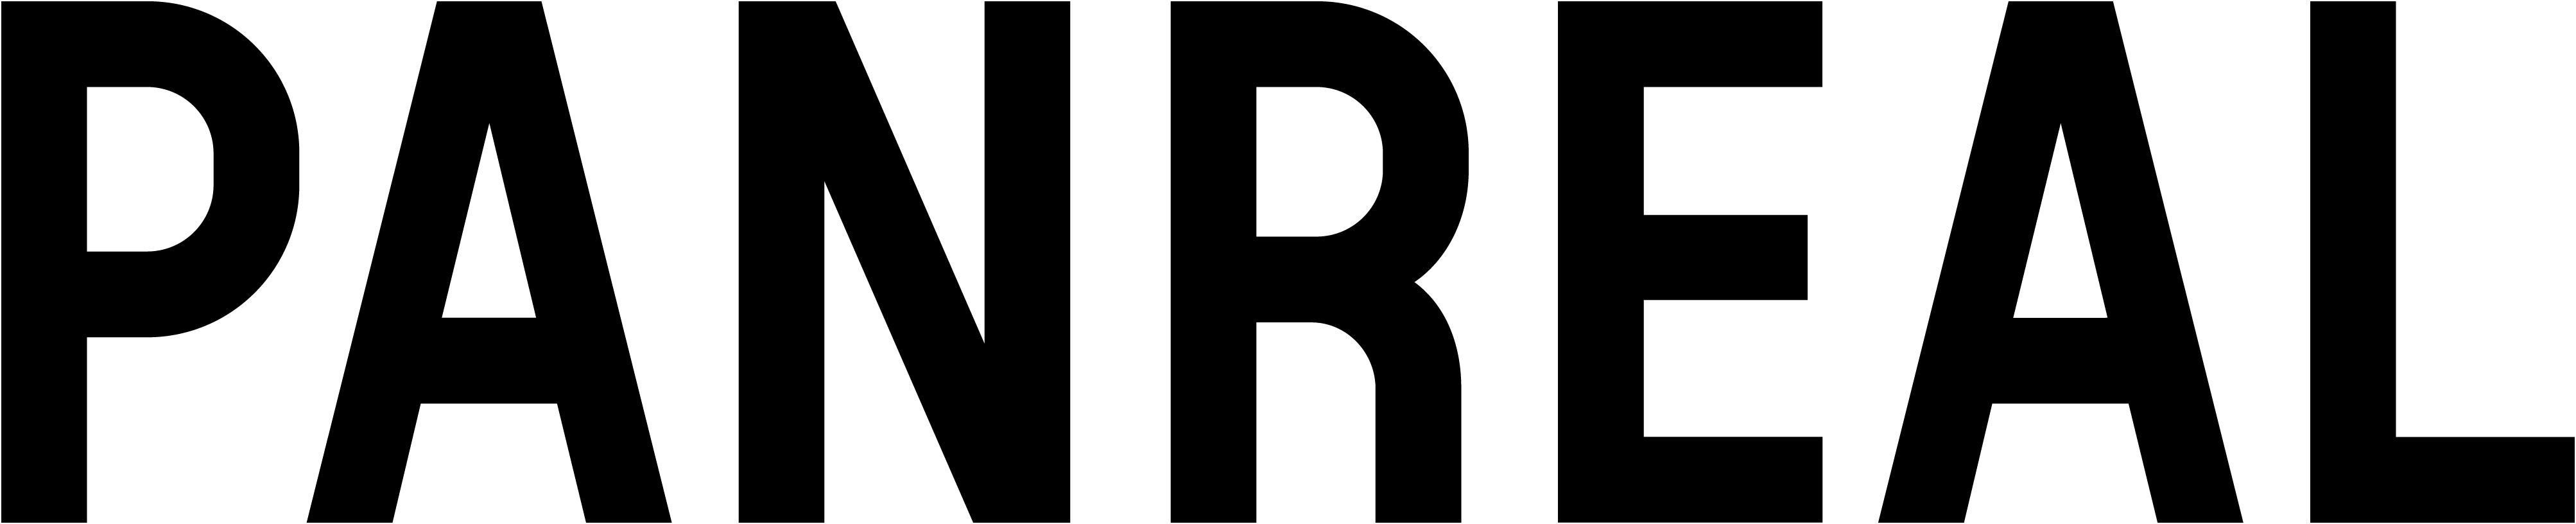 Panreal logo